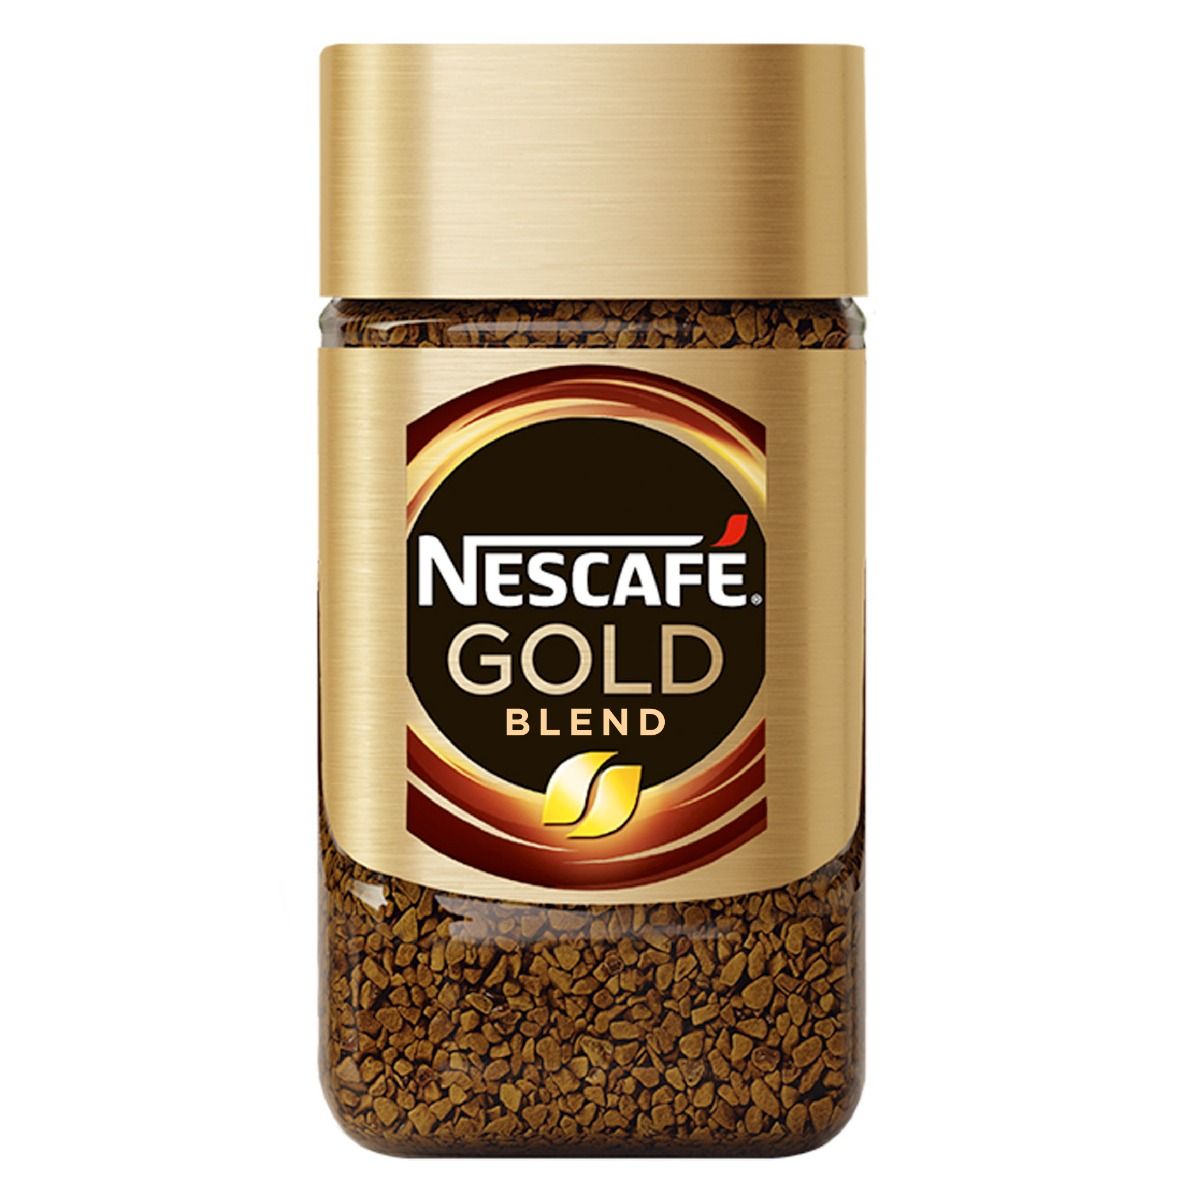 Buy Nescafe Gold Blend, 50 gm Online